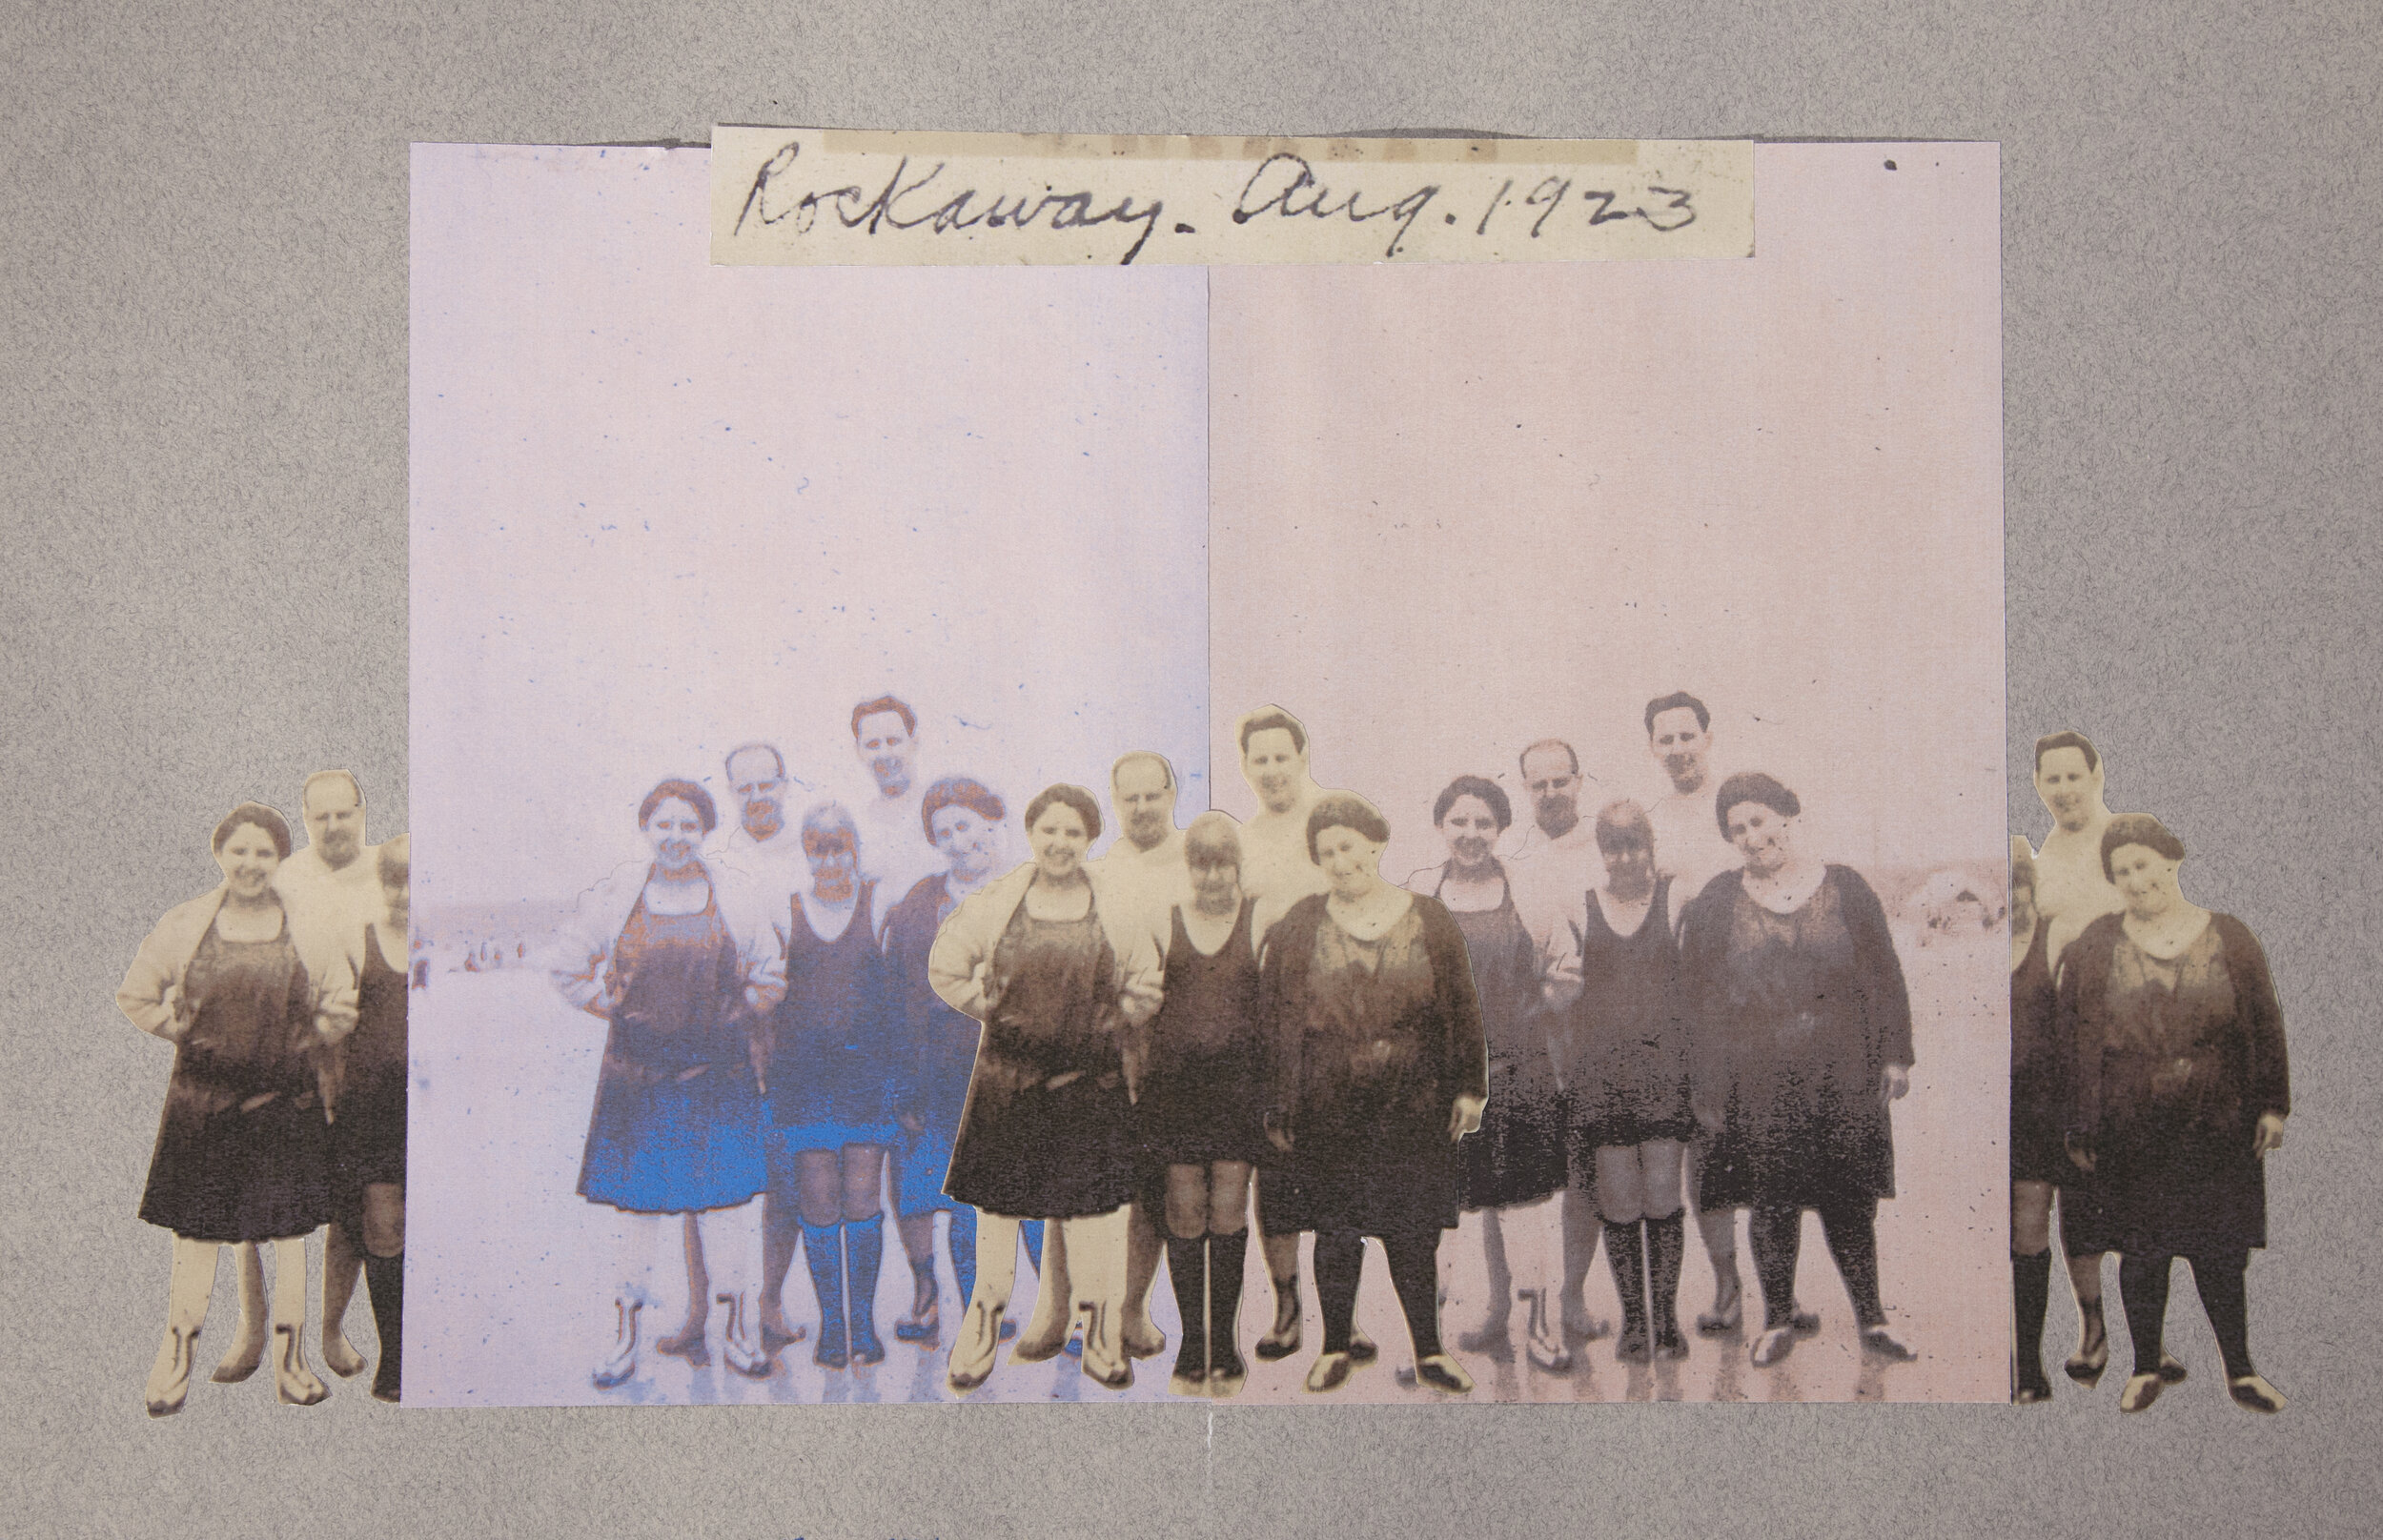 EWallenstein_Rockaway August 1923-12x18%22.jpg